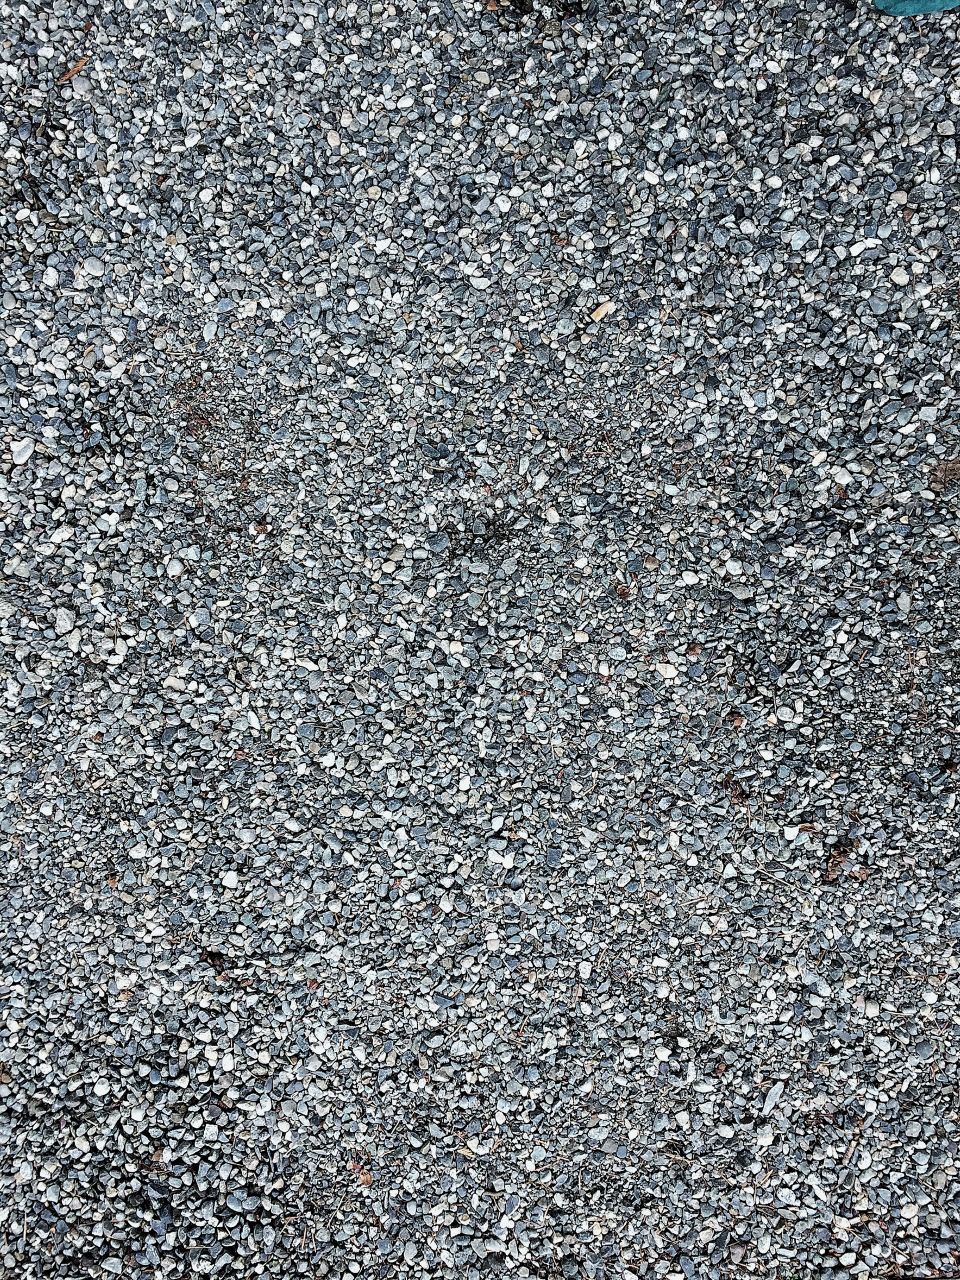 Light grey gravel texture
